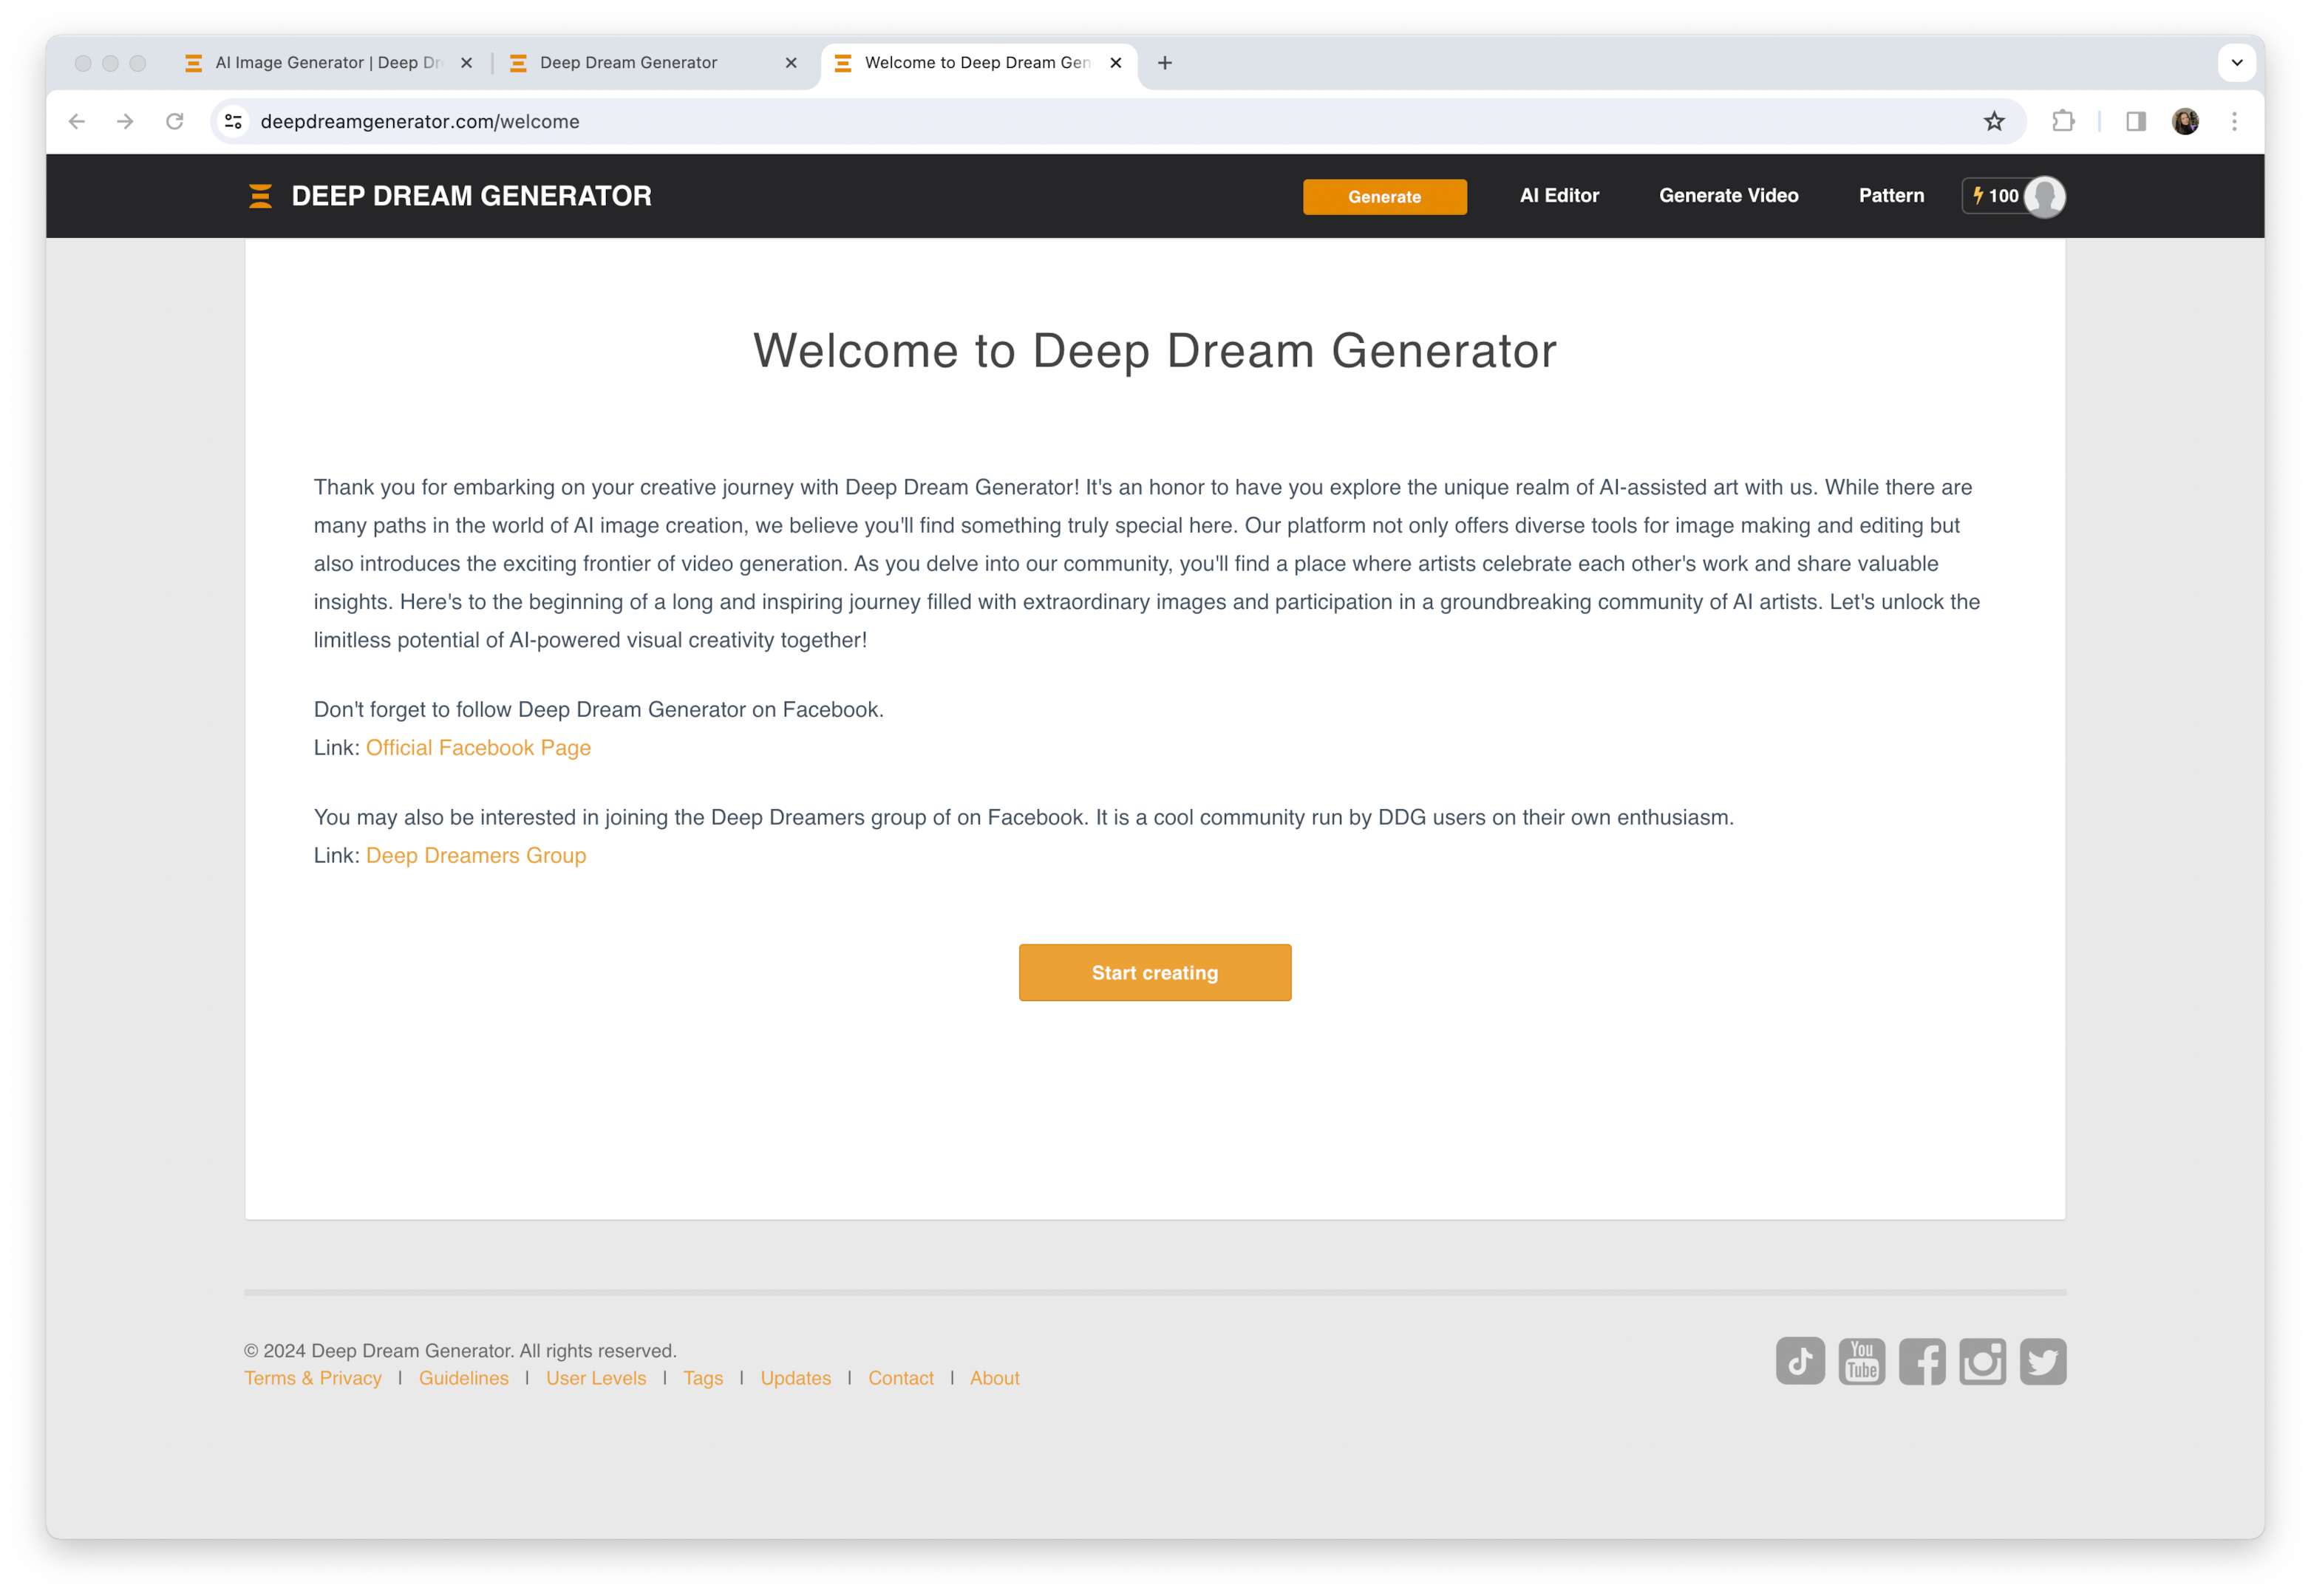  Deep Dream Generator account